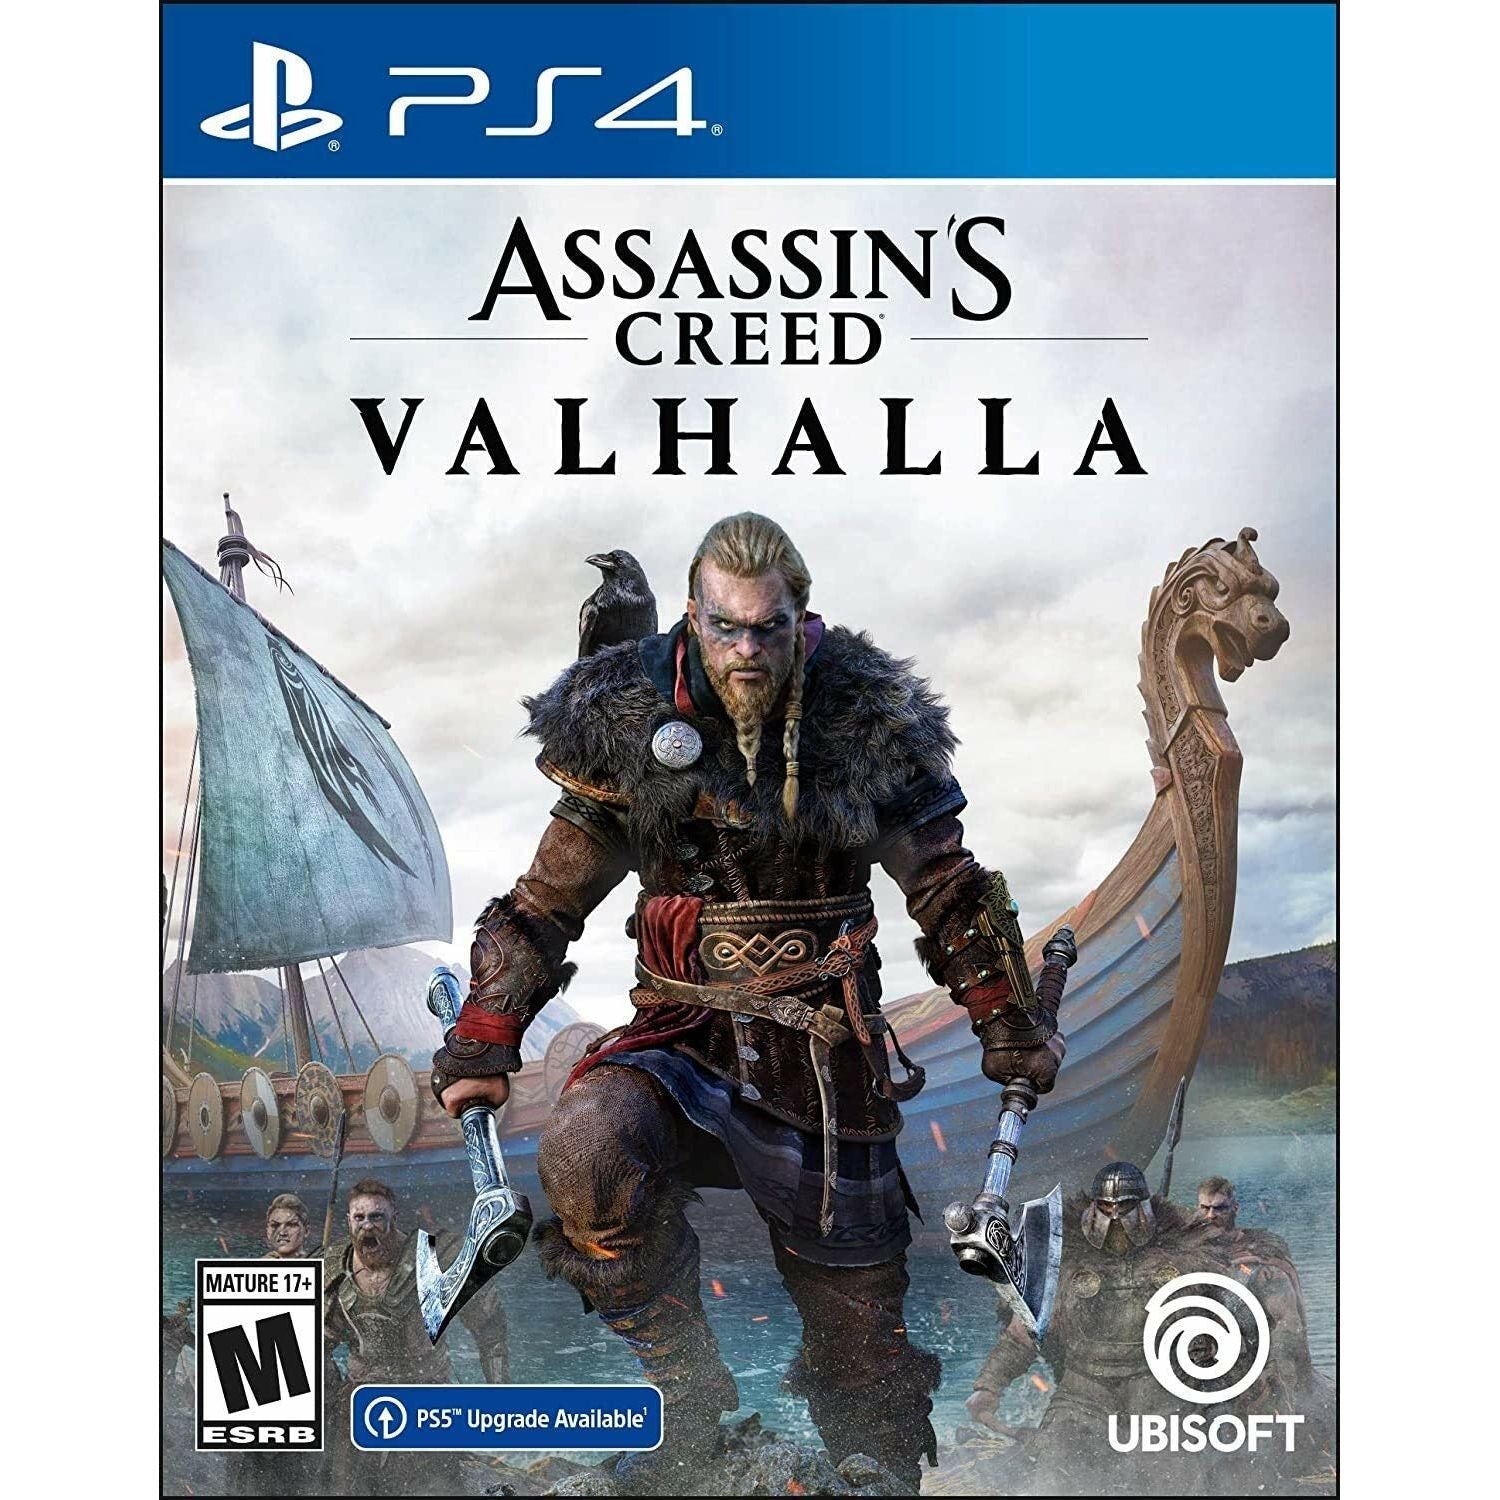 PS4 - Assassin's Creed Valhalla